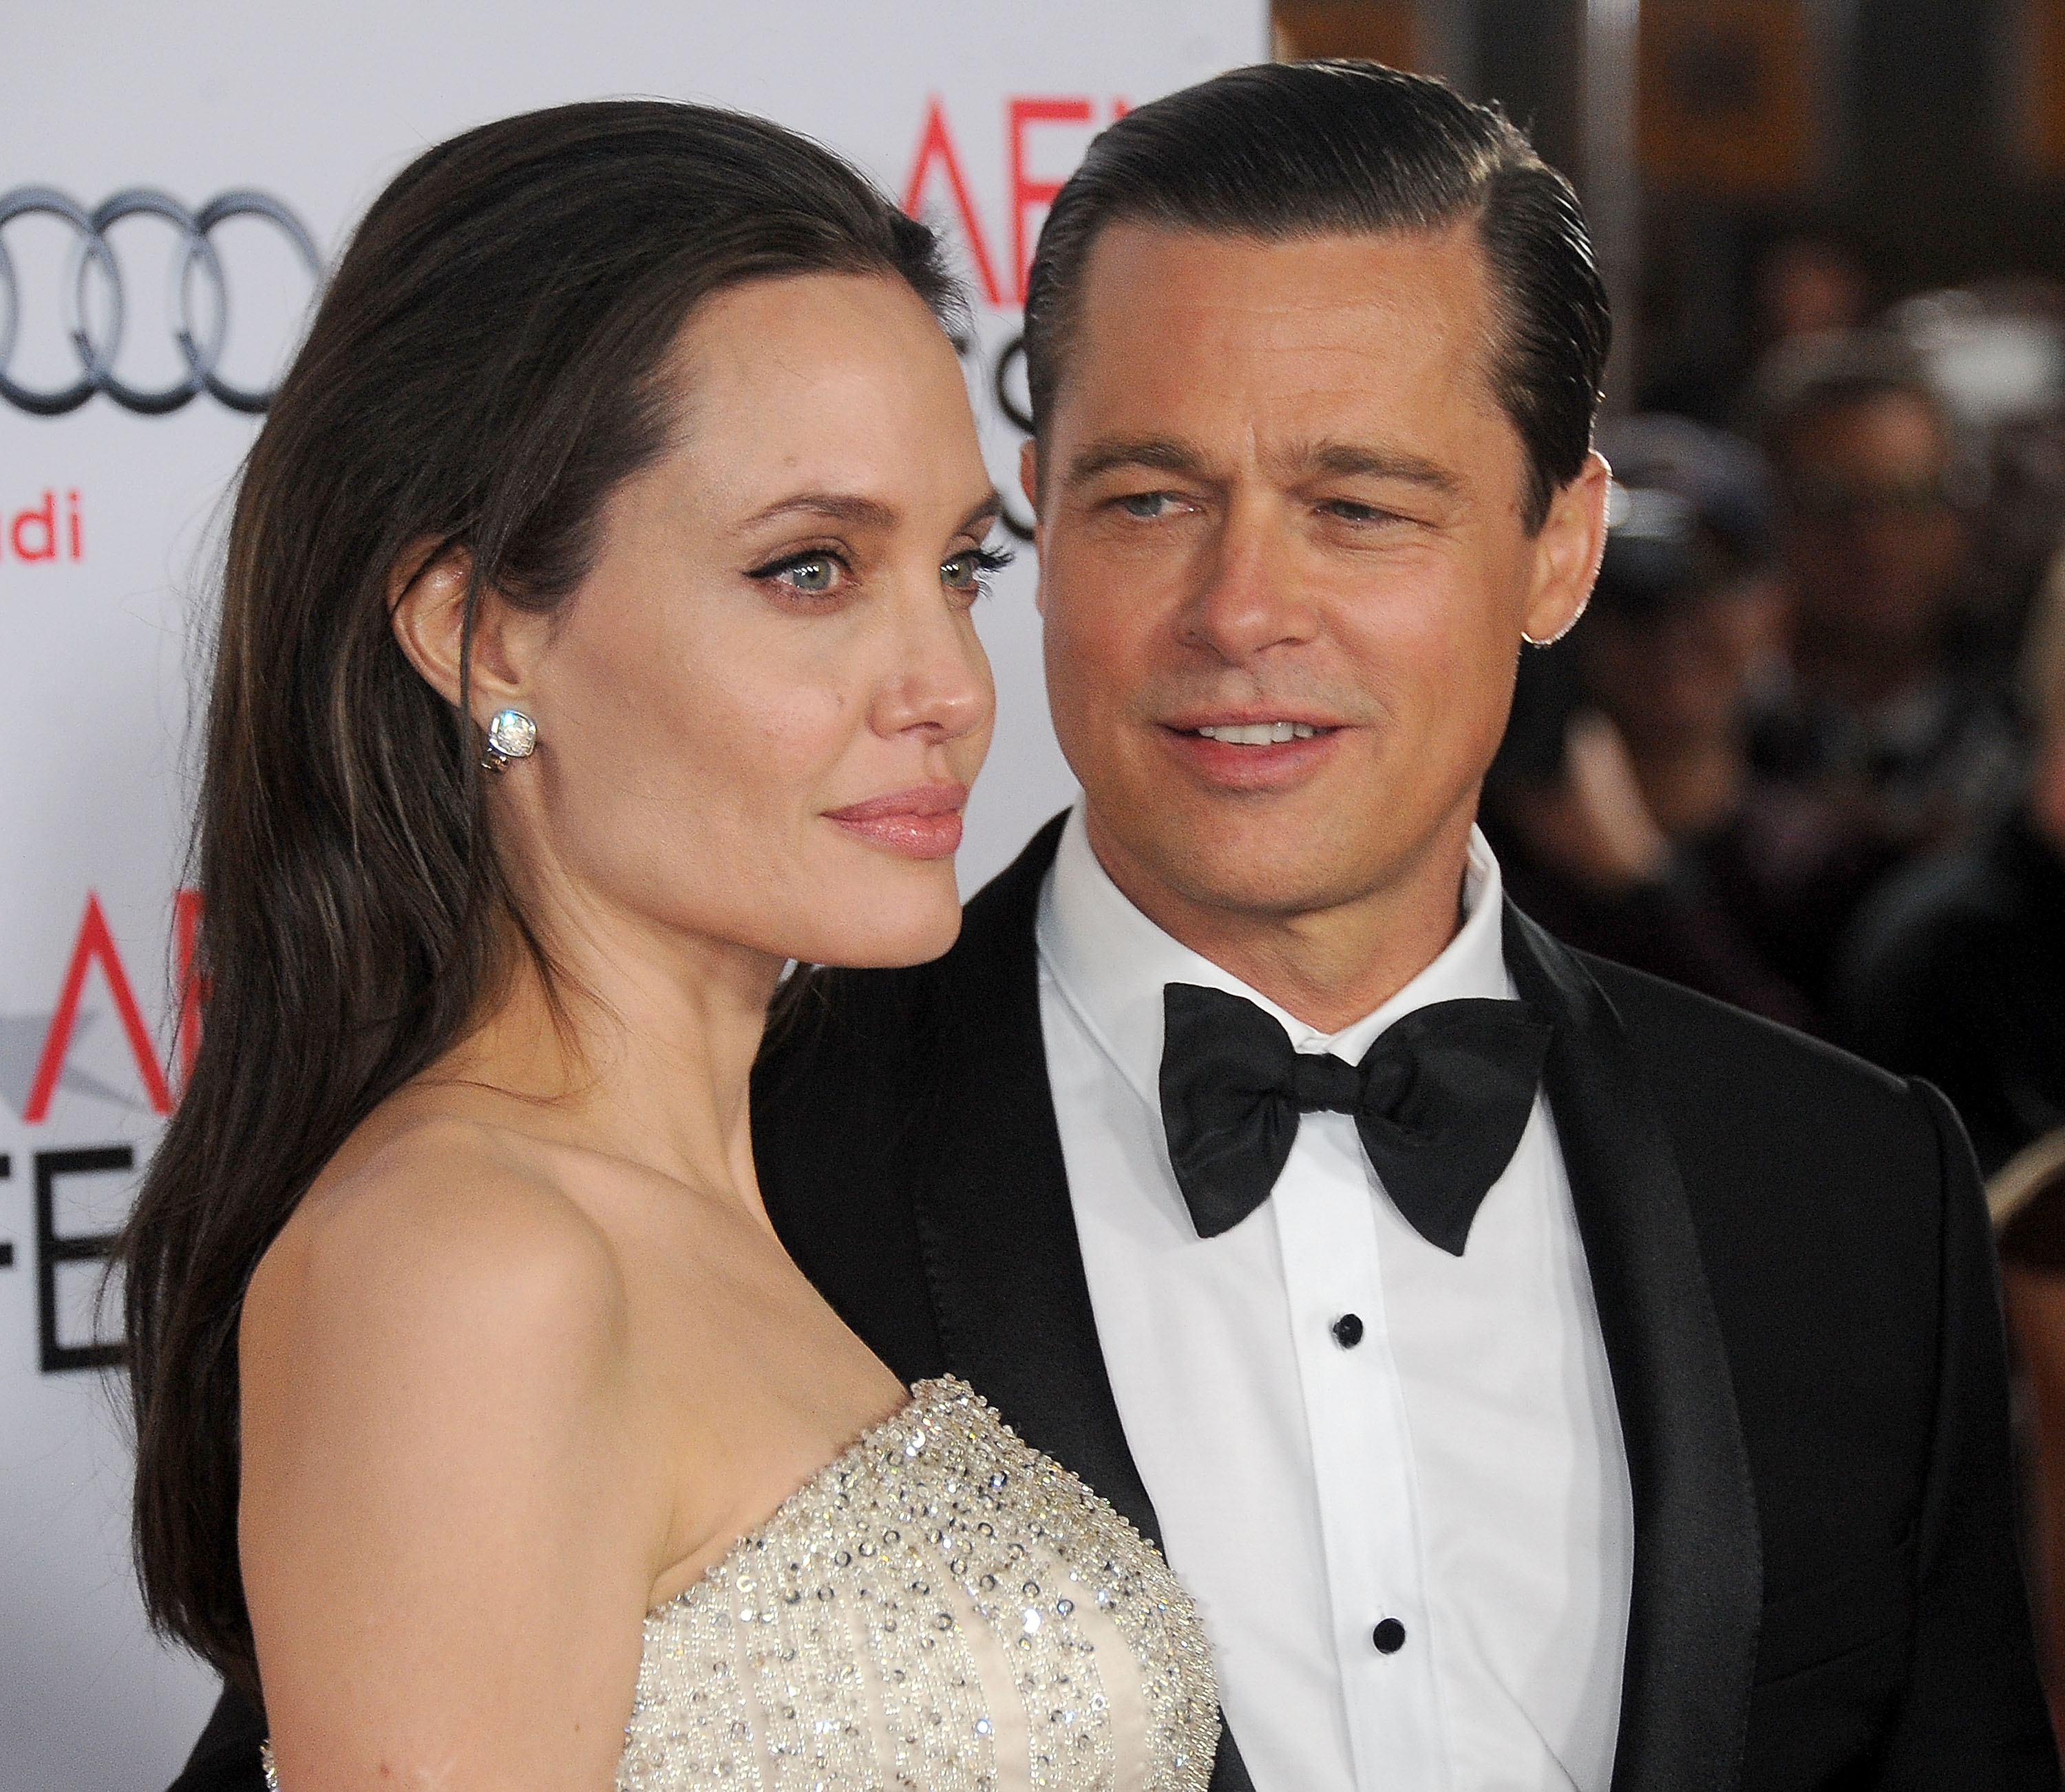 Angelina Jolie y Brad Pitt en el AFI FEST 2015 en Hollywood | Fuente: Getty Images